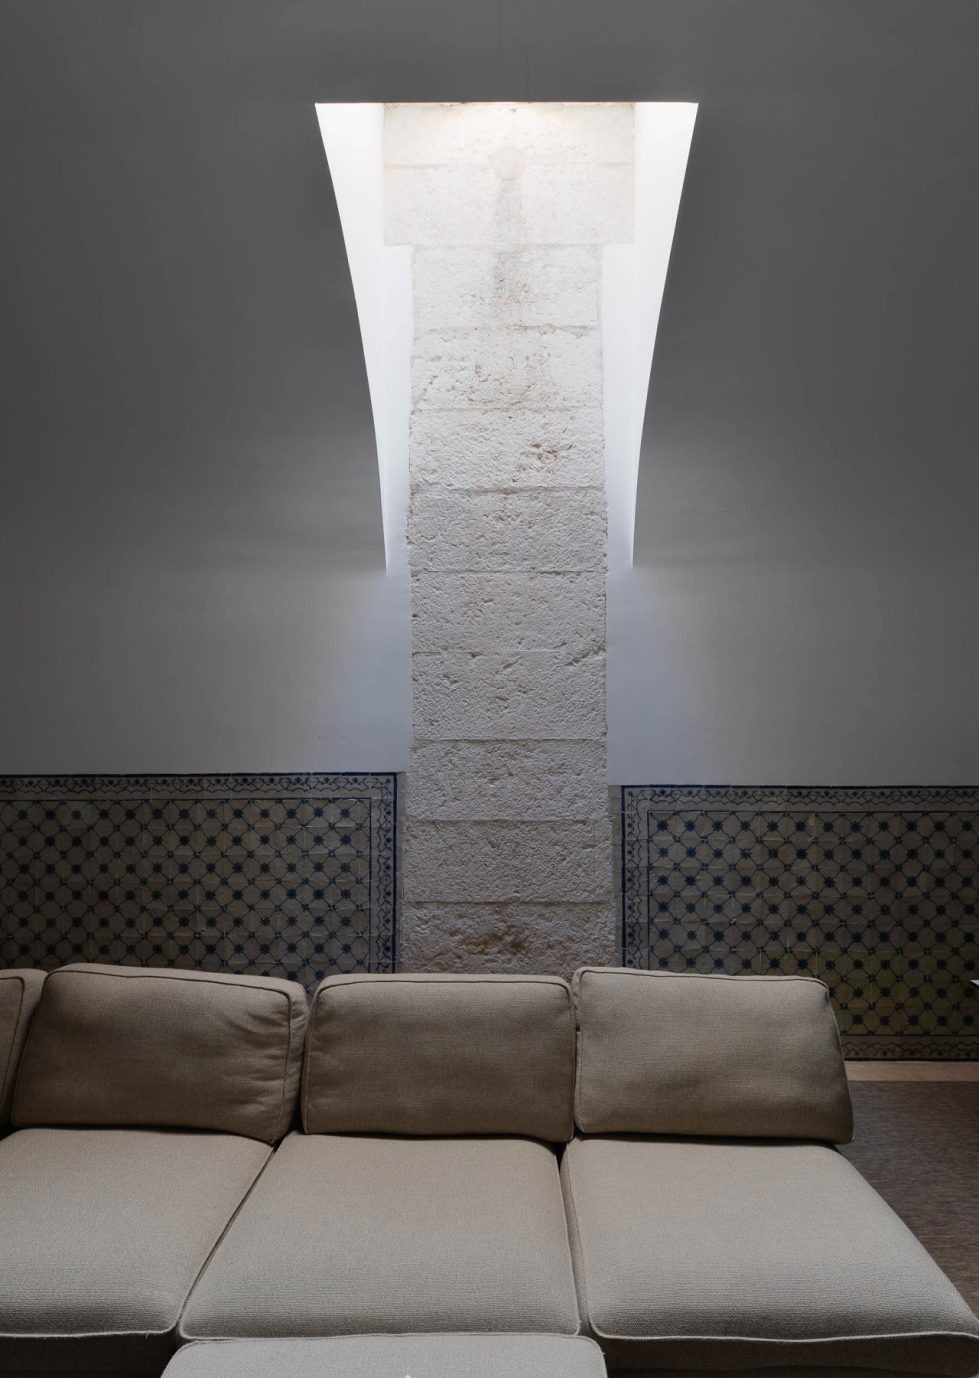 The luxury interior by Aires Mateus Arquitectos, Lisbon